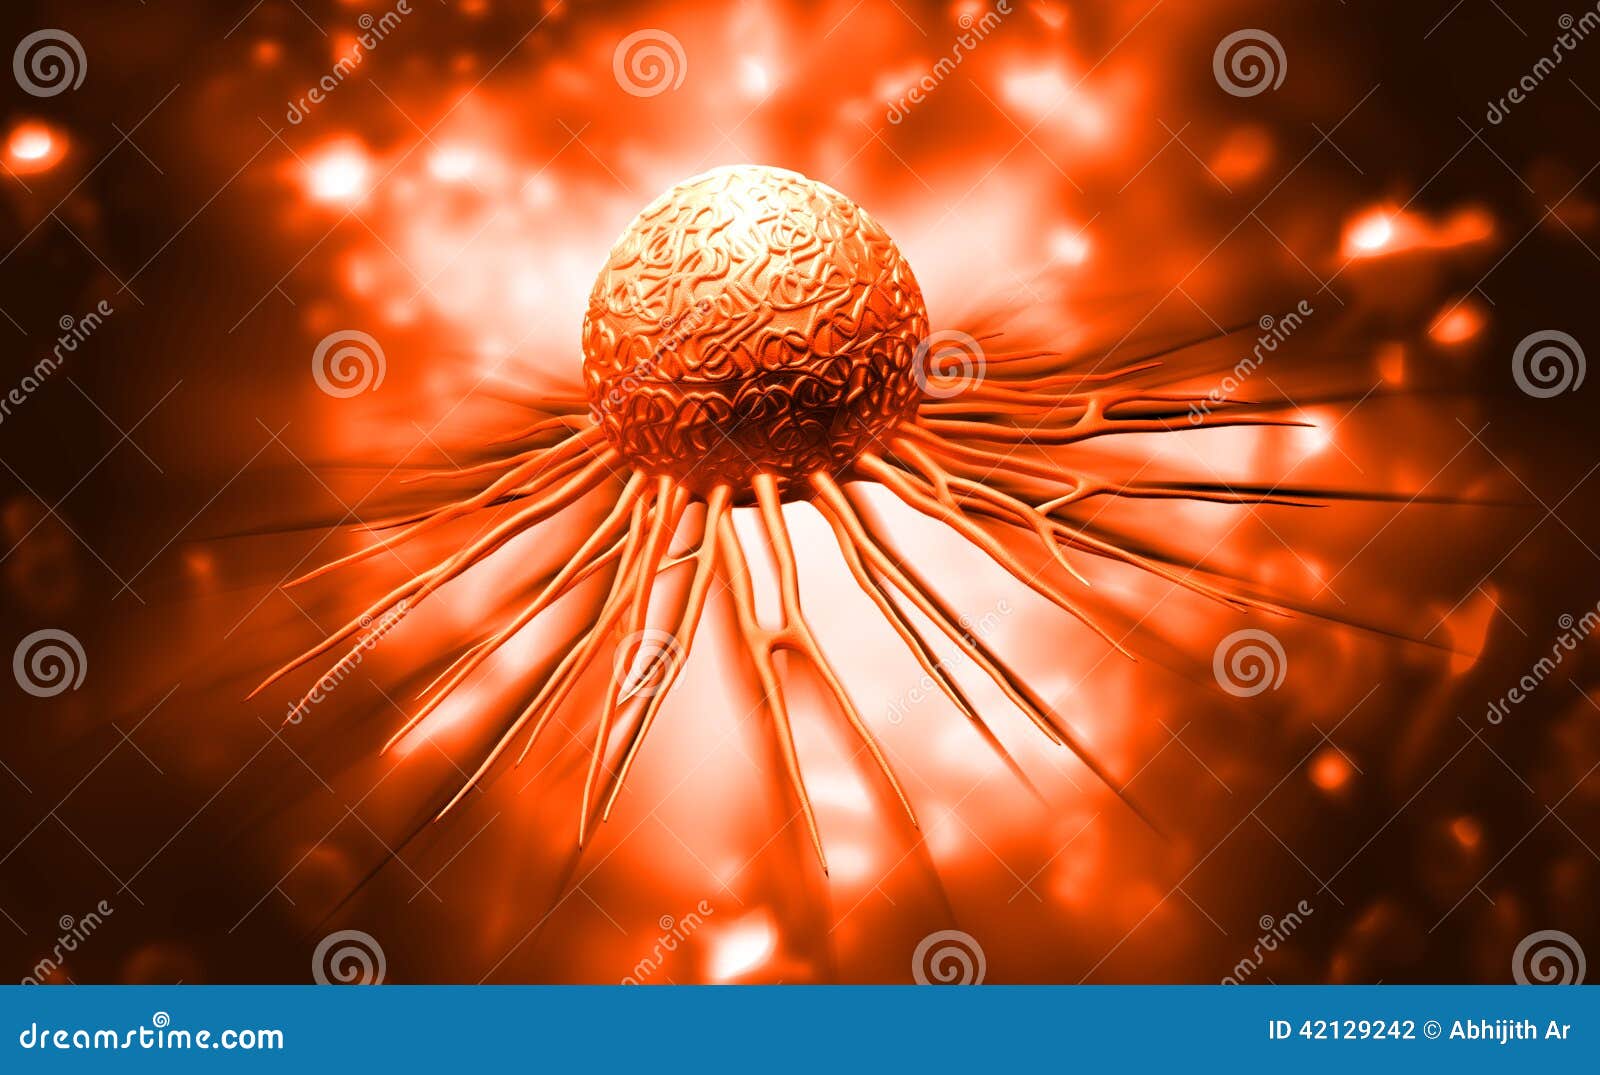 1000 Cancer Cells Pictures  Download Free Images on Unsplash